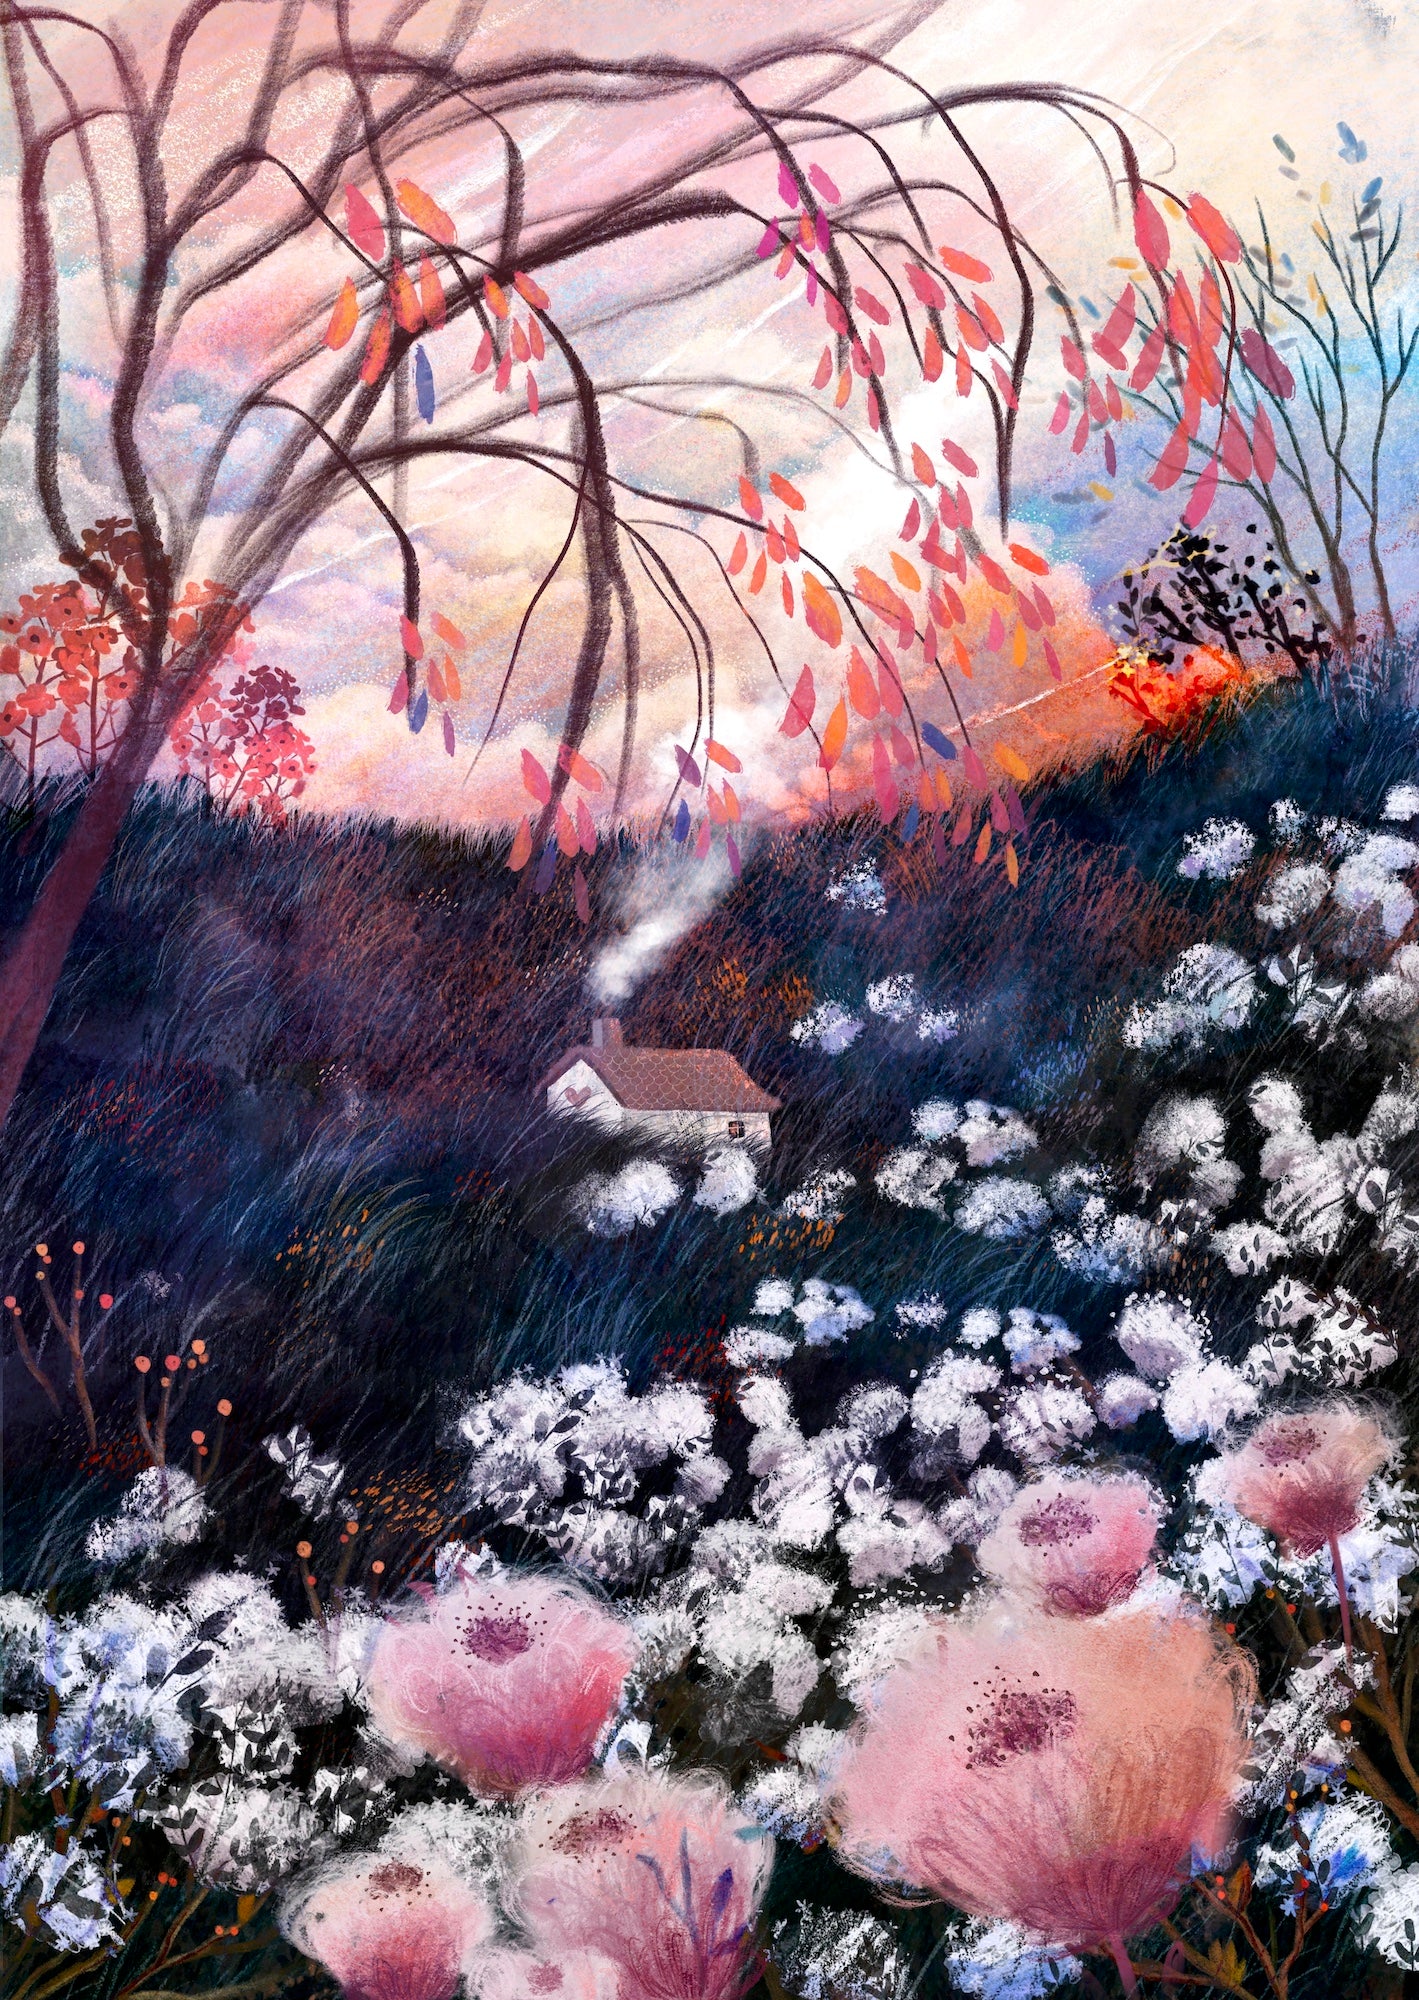 Giclee Fine Art Print "Last Blooms Before Winter"